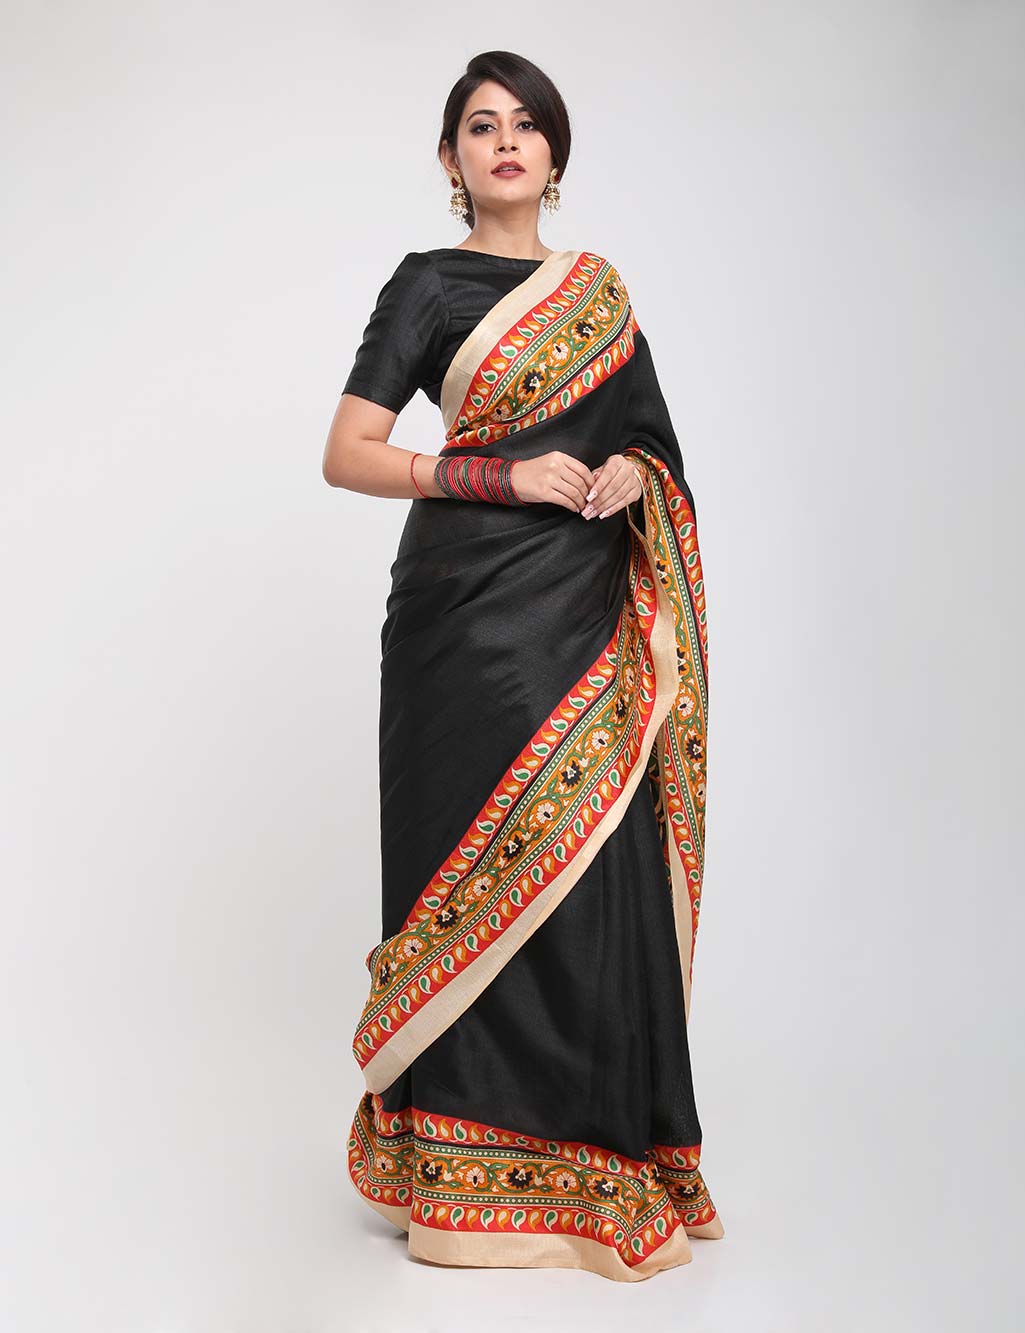 Classic Black Kathpadar Saree Blouse Designs